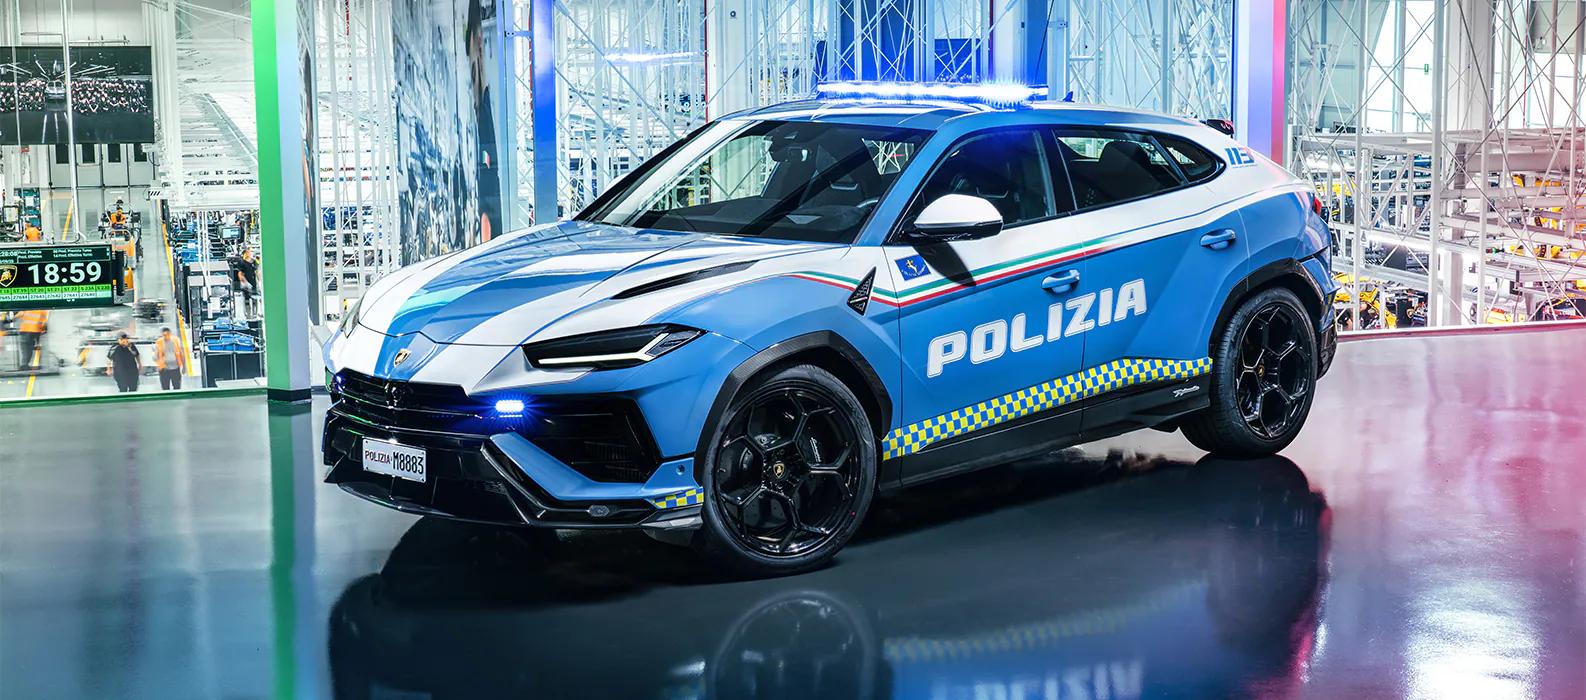 ferrari police car - Are there any Lamborghini police cars